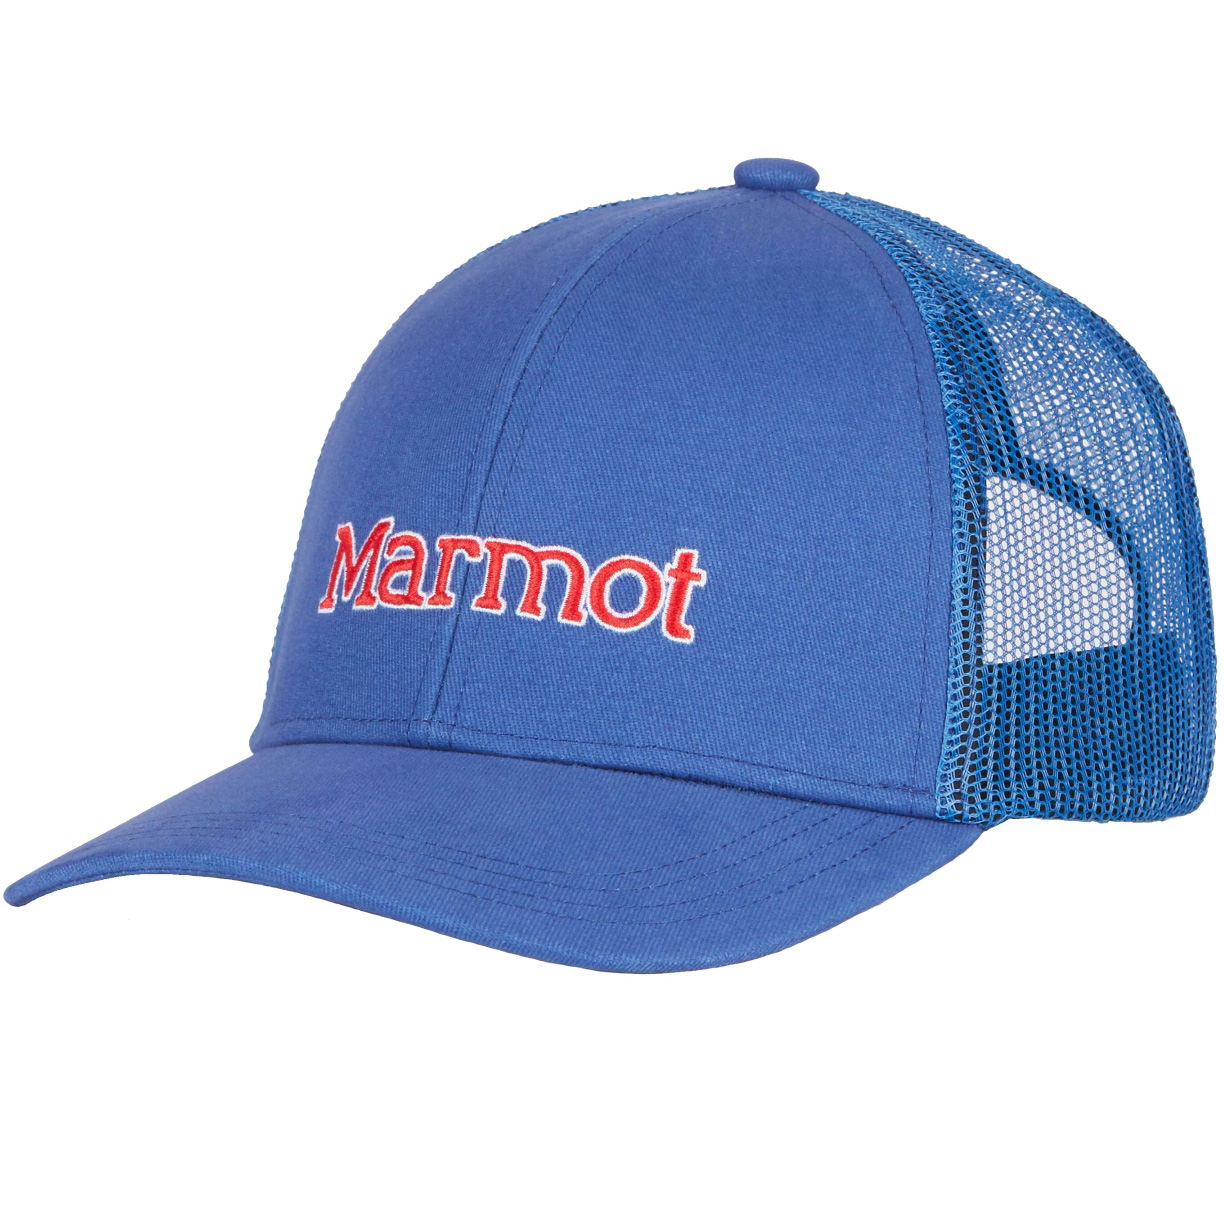 Picture of Marmot Retro Trucker Hat - trail blue